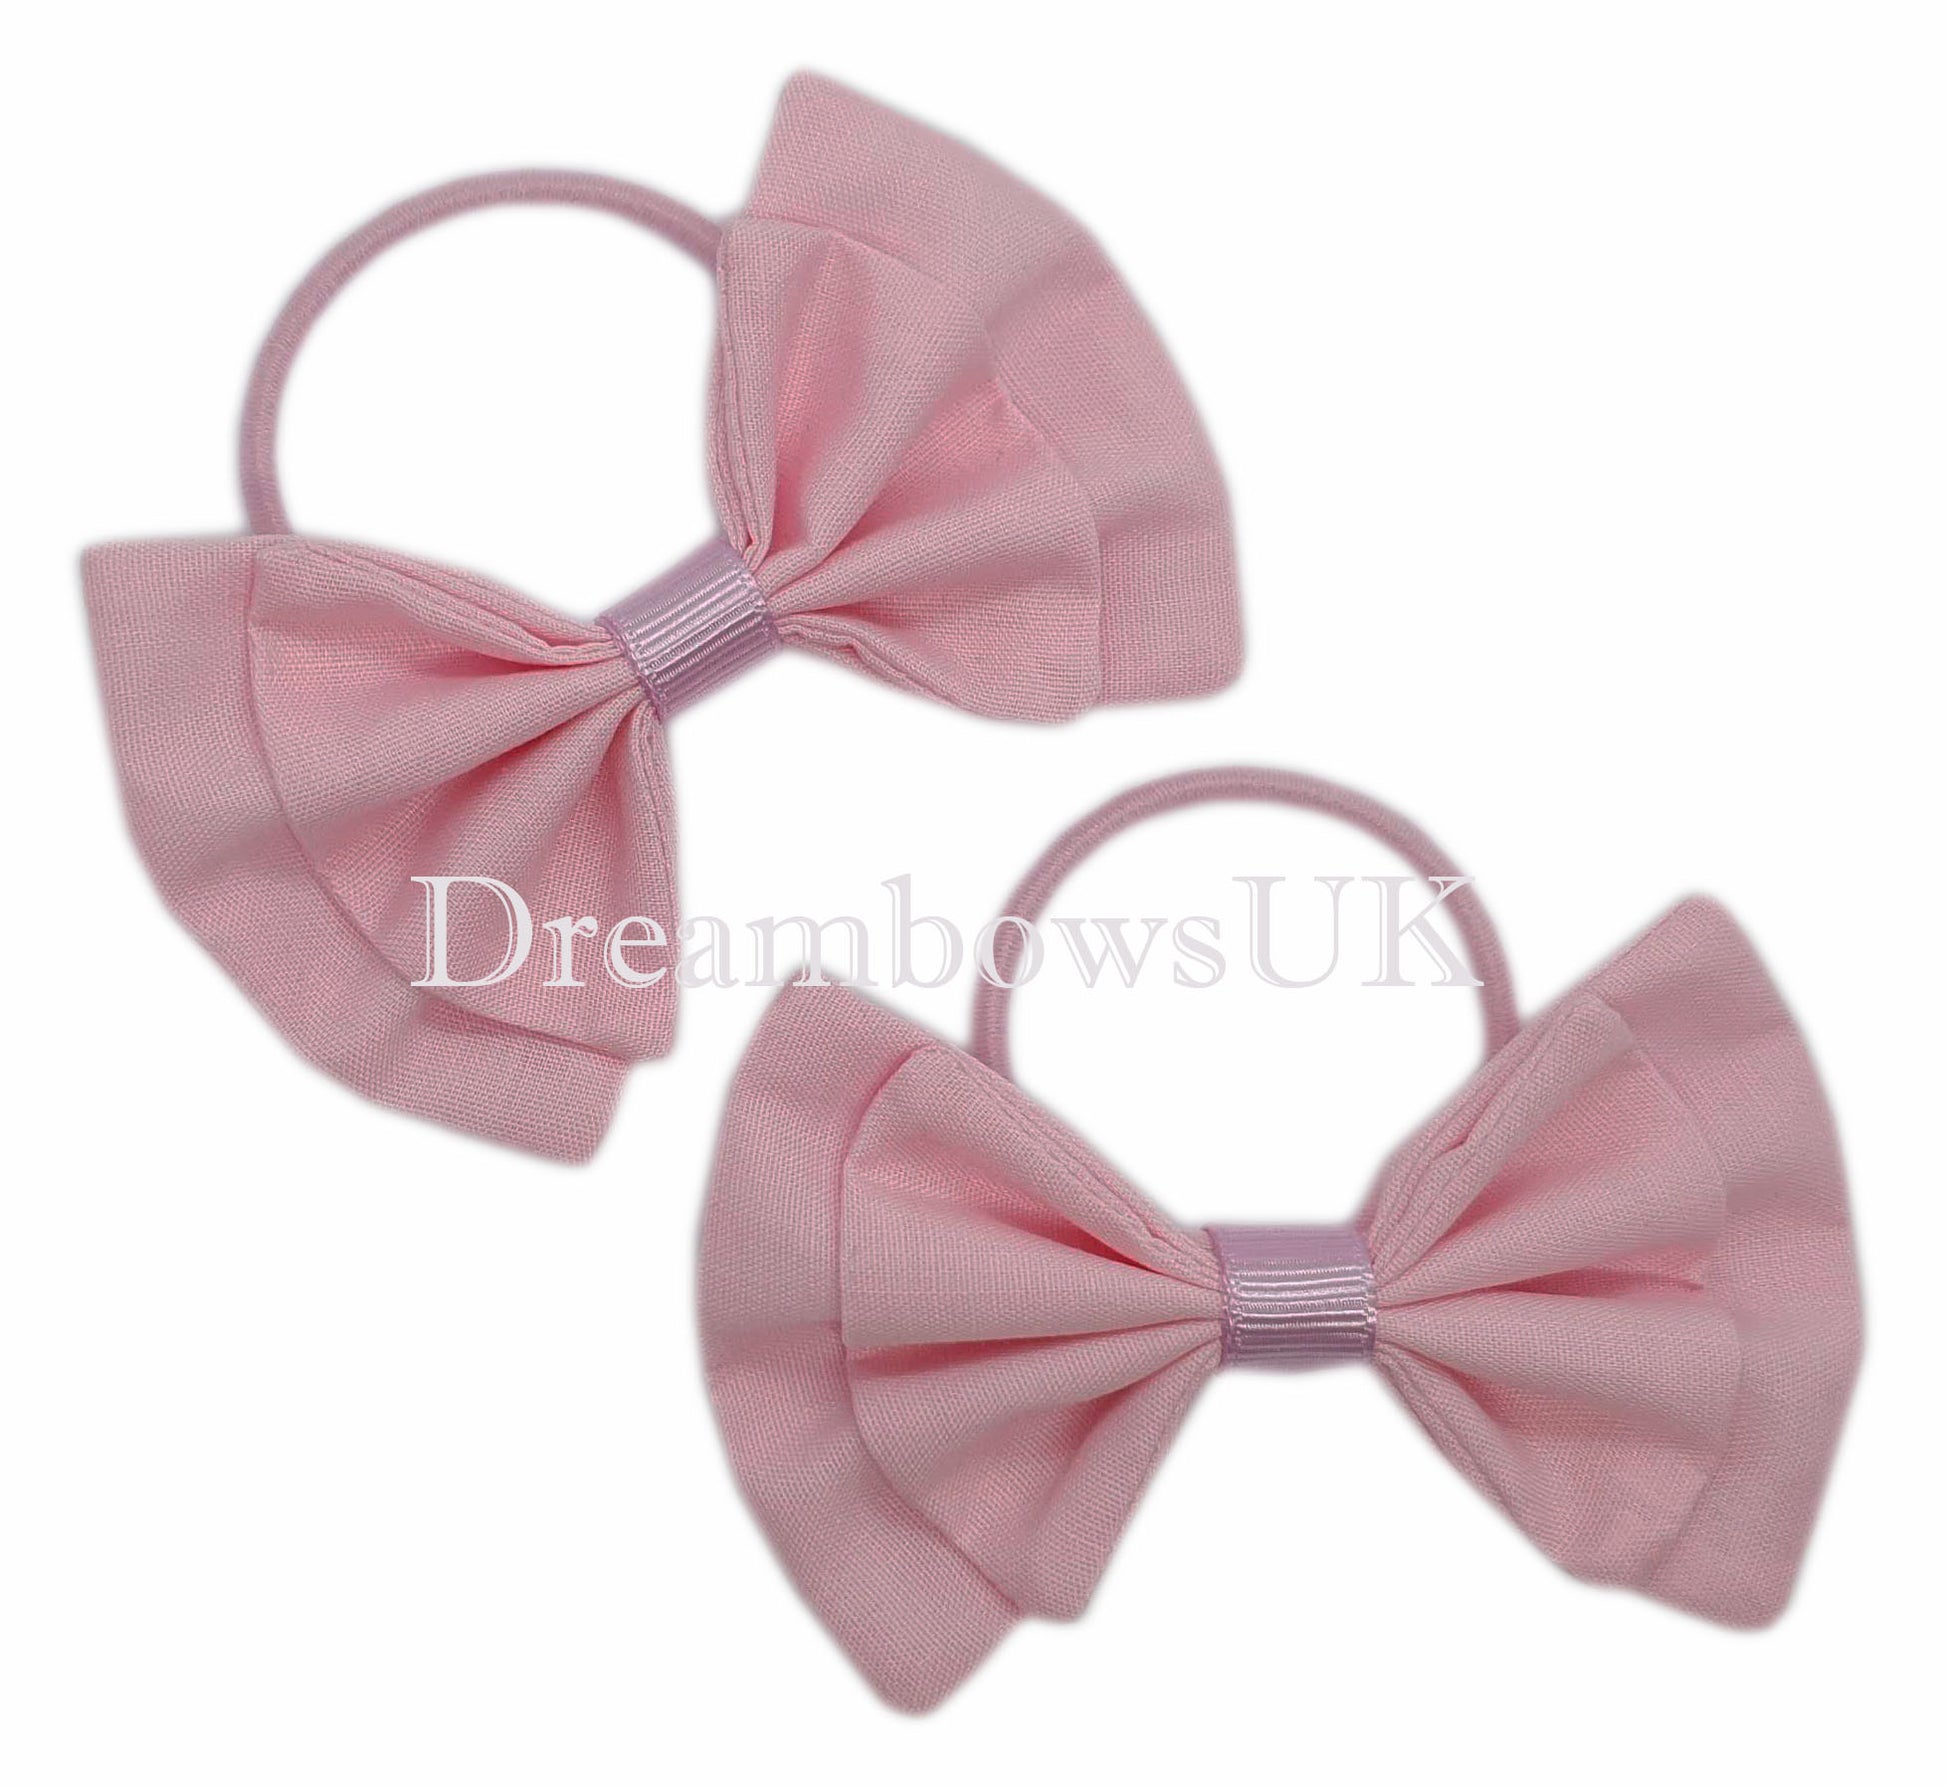 Light pink fabric hair bows on thin hair elastics